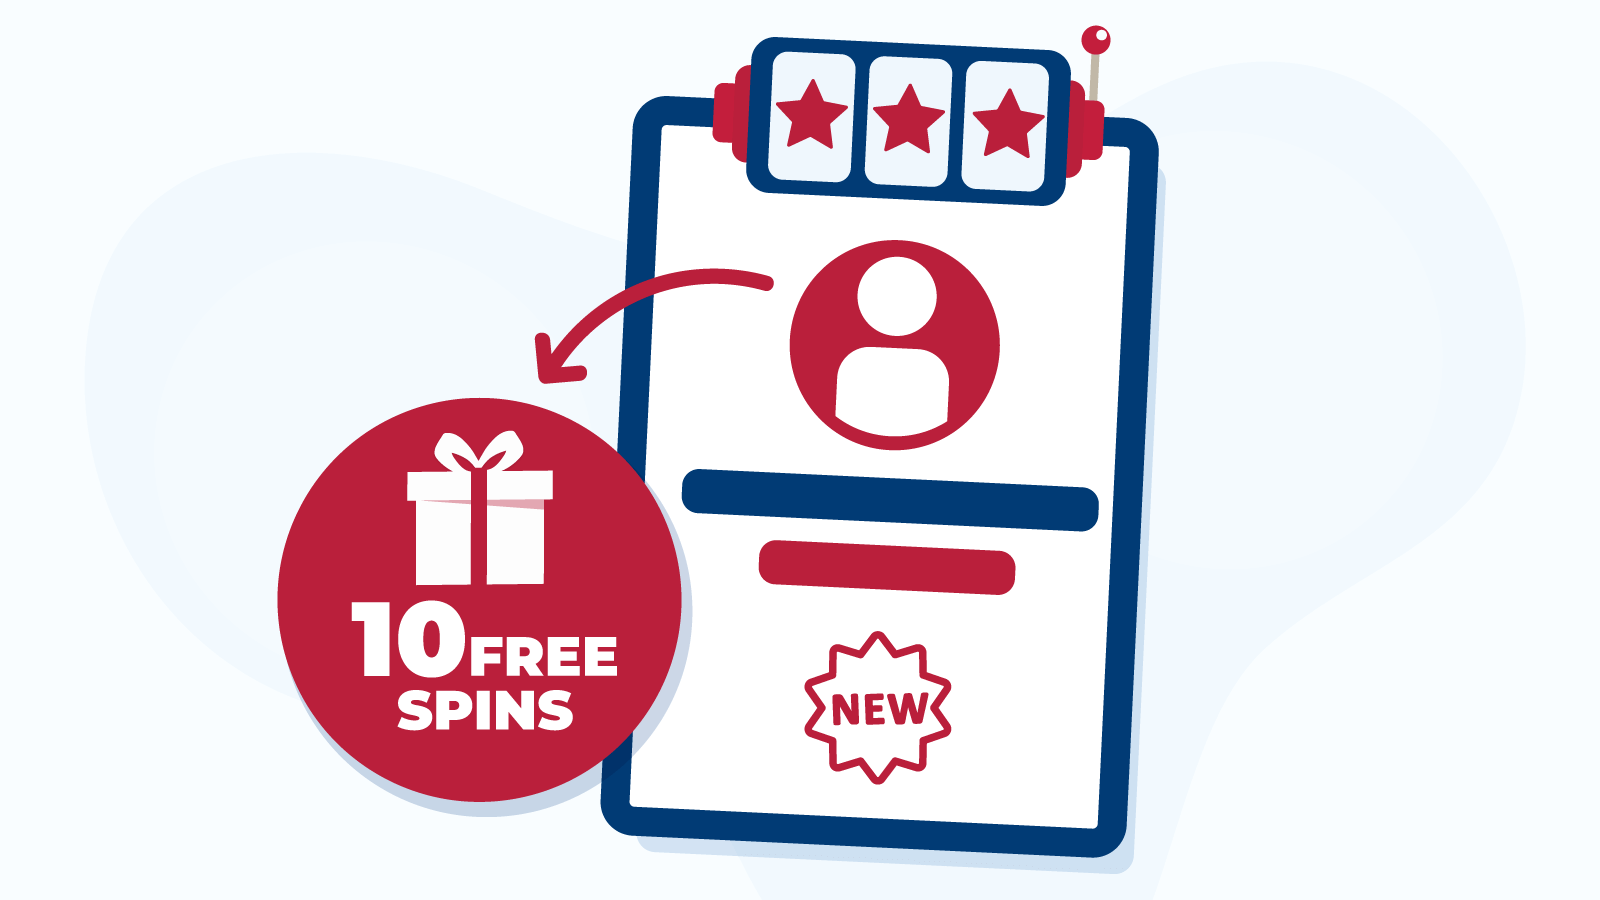 Registration 10 Free Spins on Slots